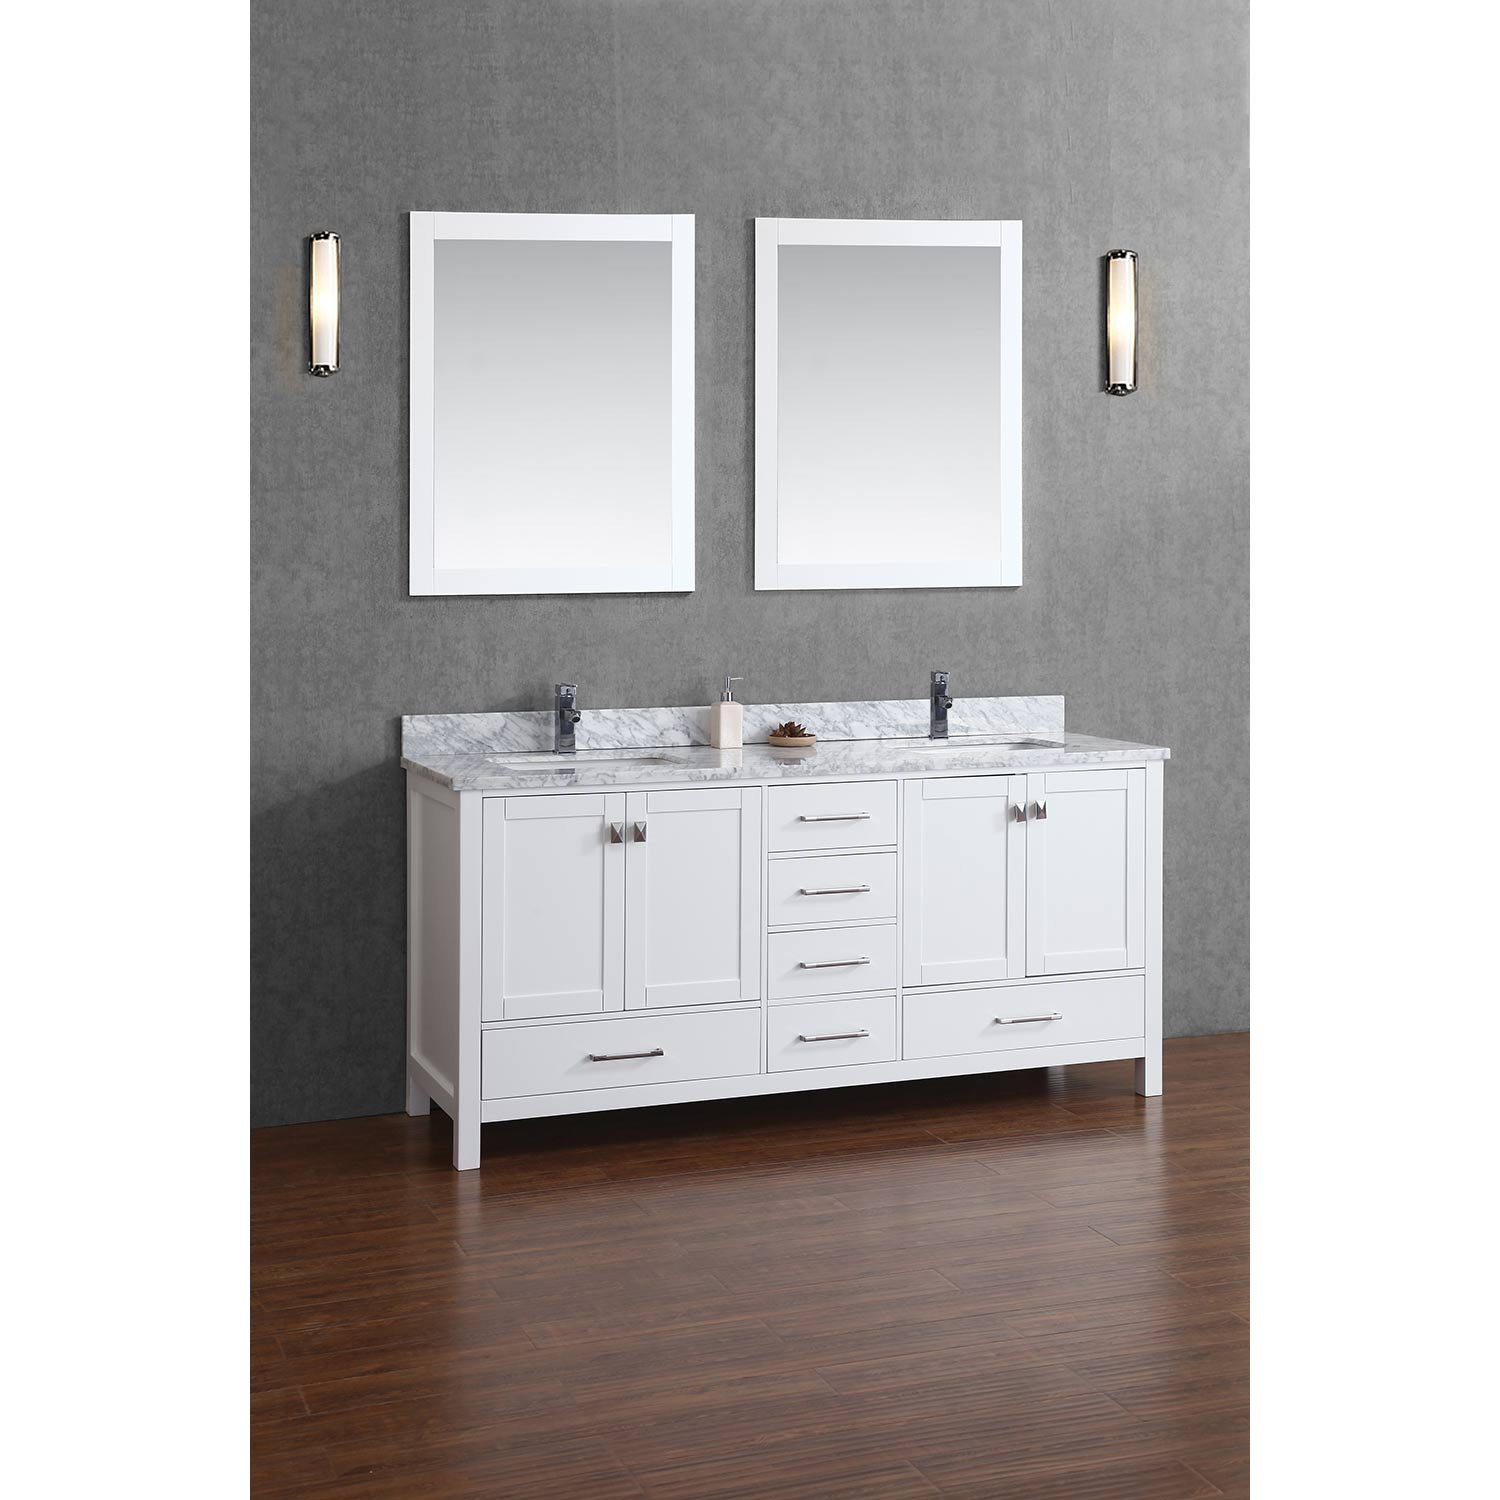 Real Wood Bathroom Vanities
 Buy Vincent 72 Inch Solid Wood Double Bathroom Vanity in